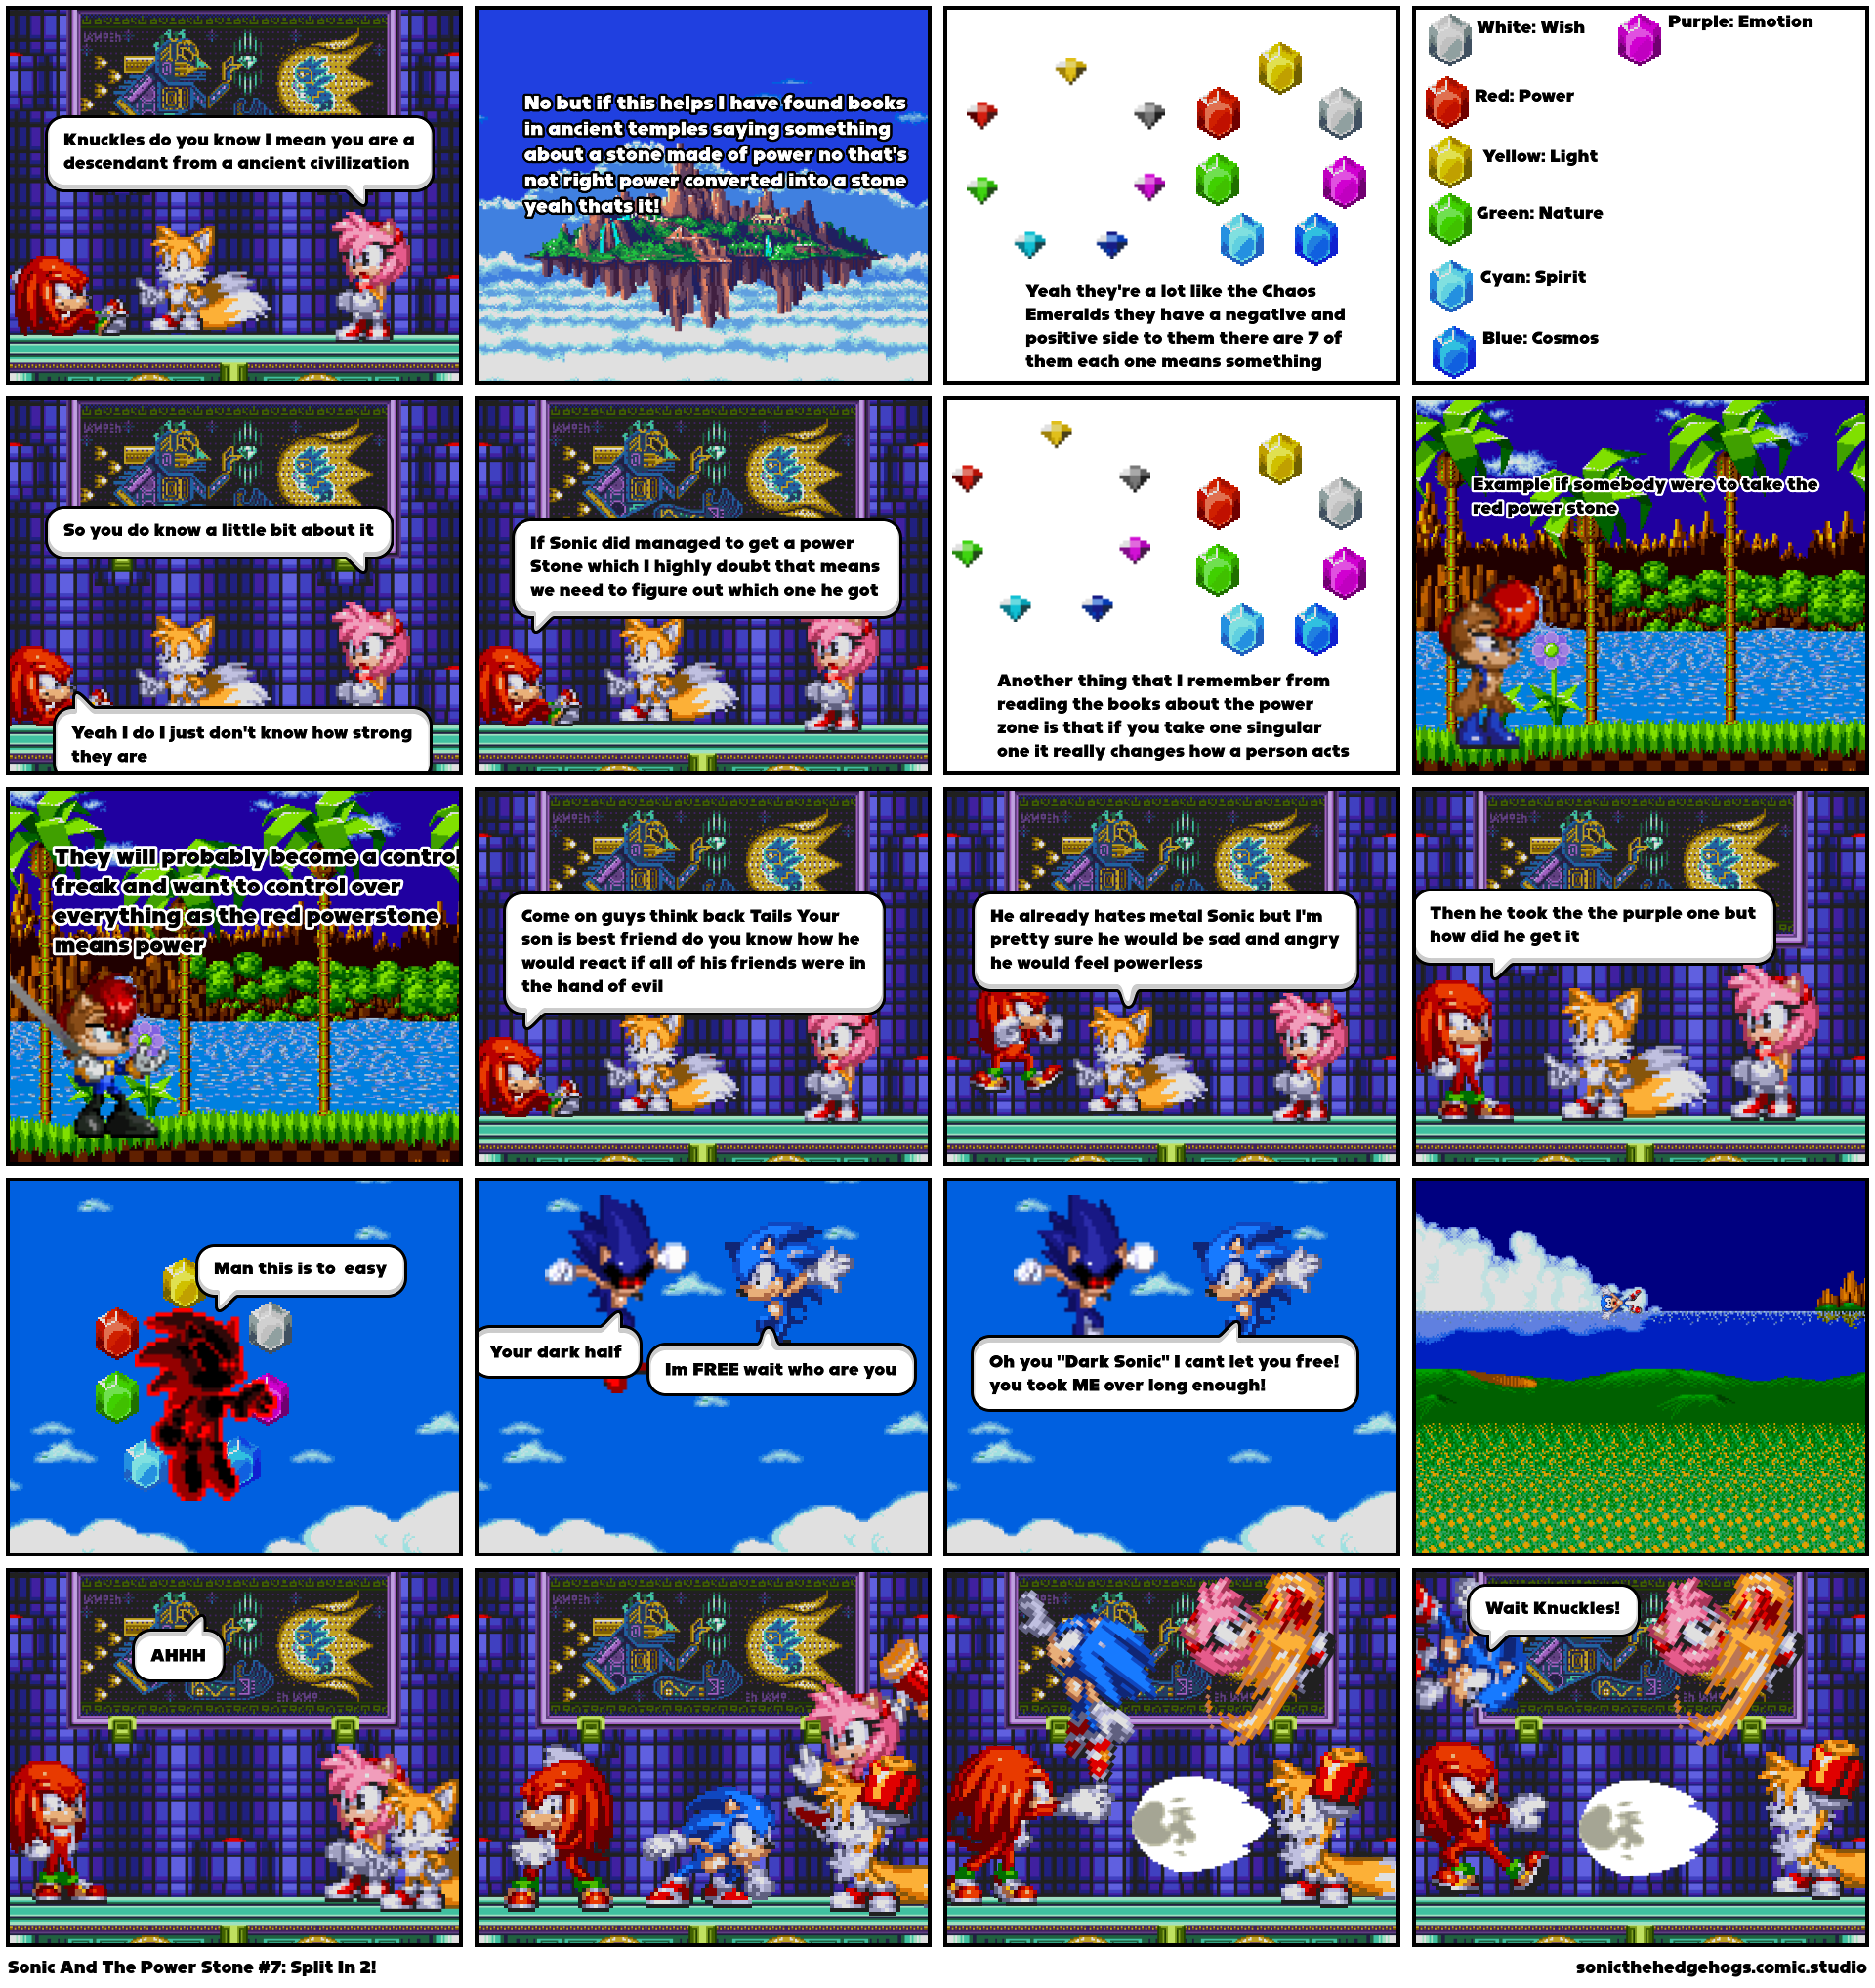 Sonic Chaos - Screenshots - SMS Power!